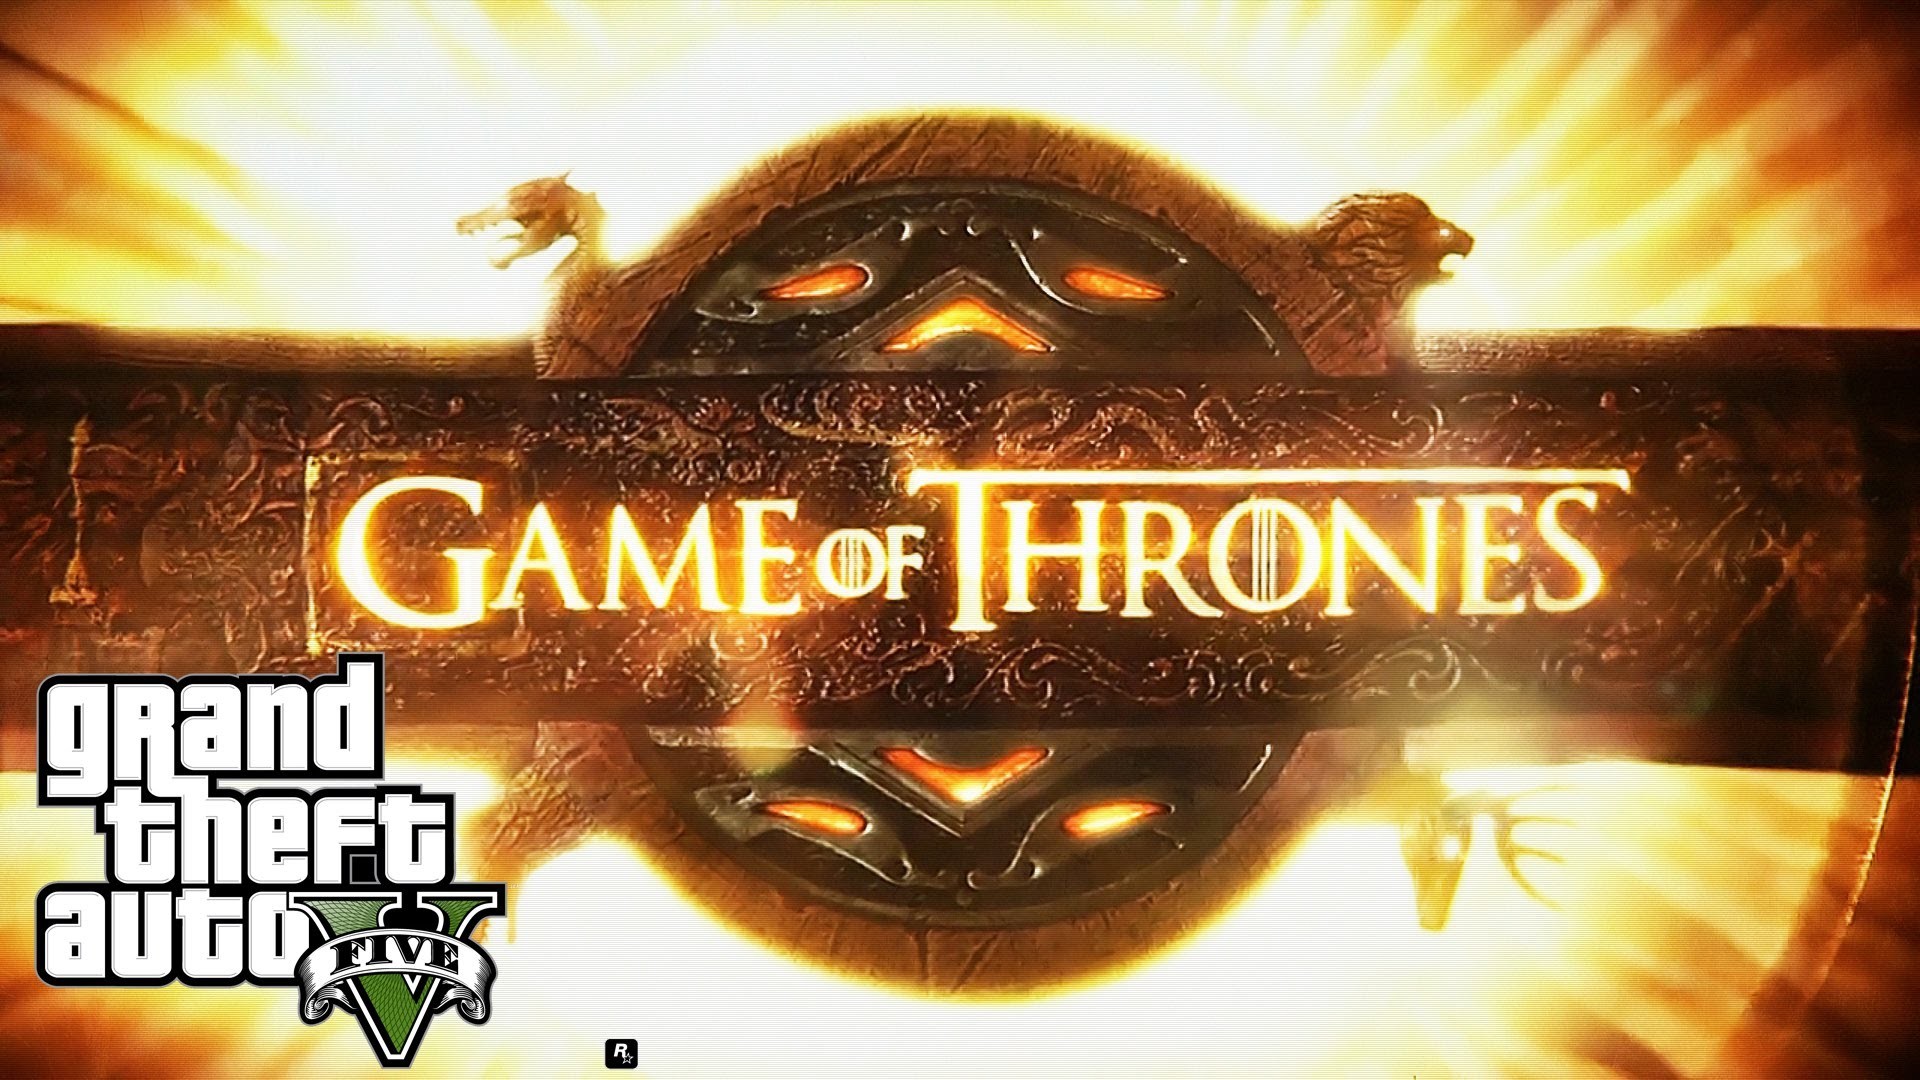 1920x1080 Video Game of Thrones: GTA 5